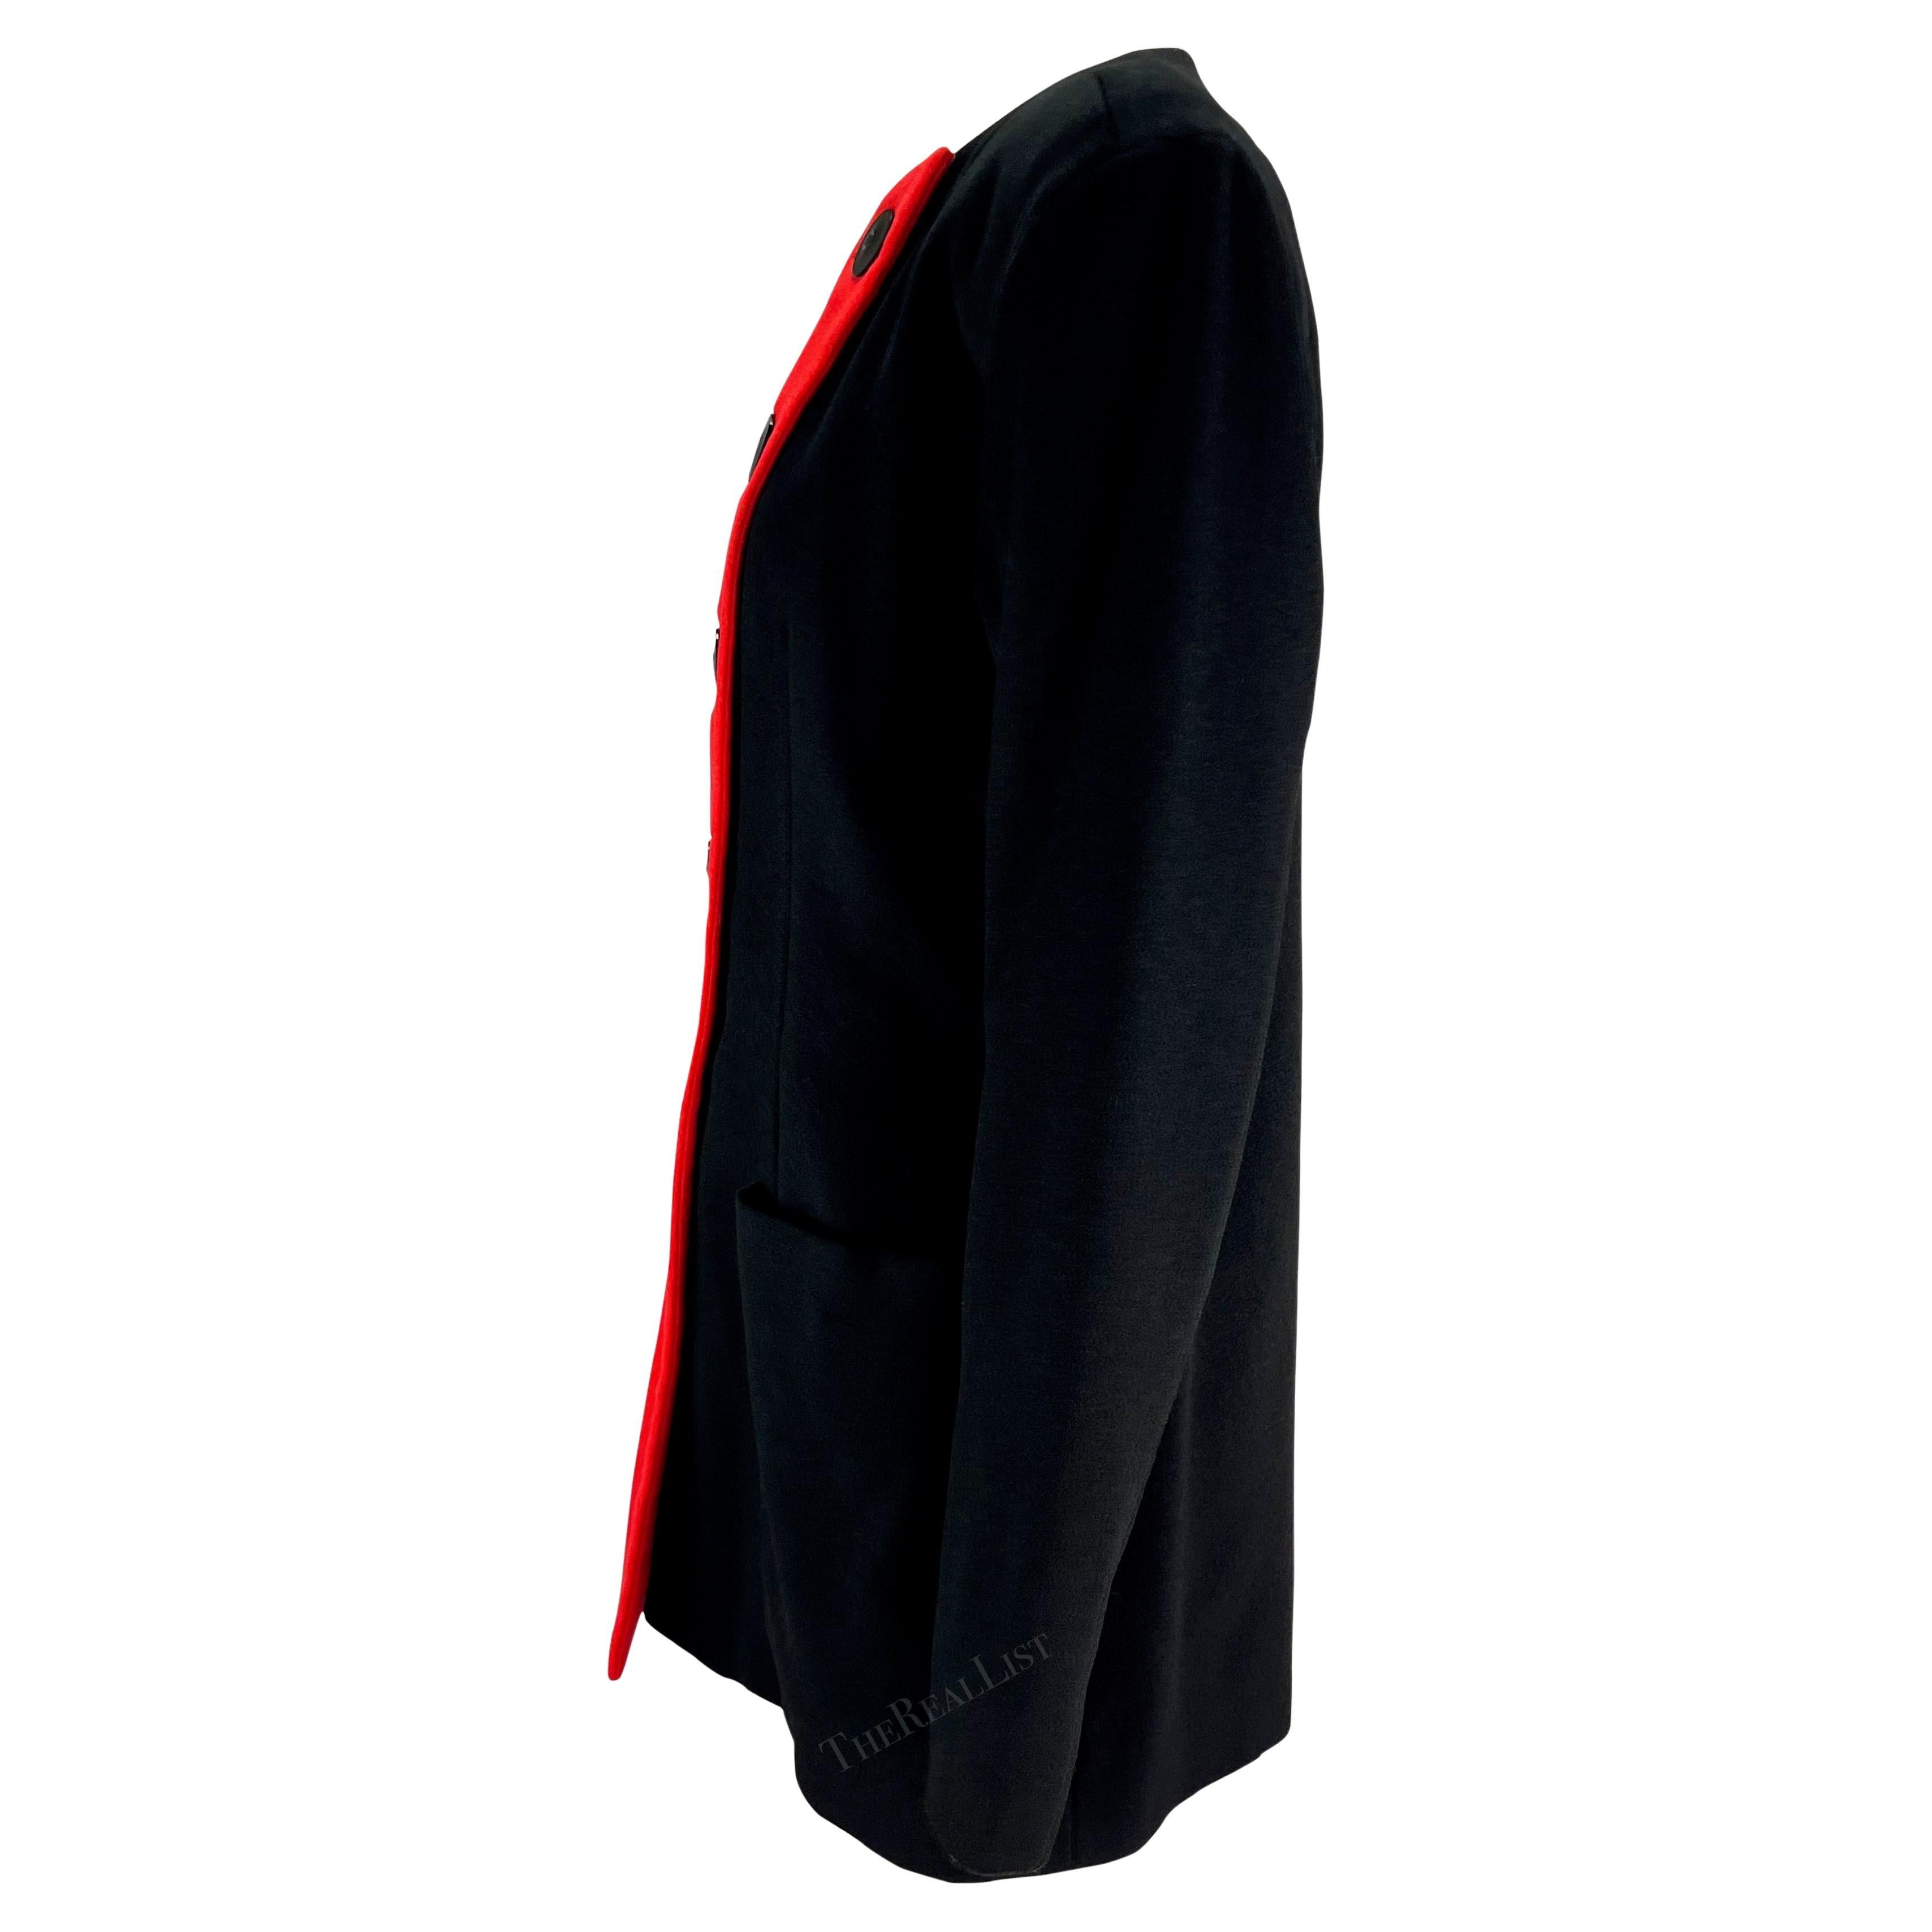 S/S 1992 Yves Saint Laurent Red Color-Block Black Mini Coat Dress Blazer Jacket For Sale 1